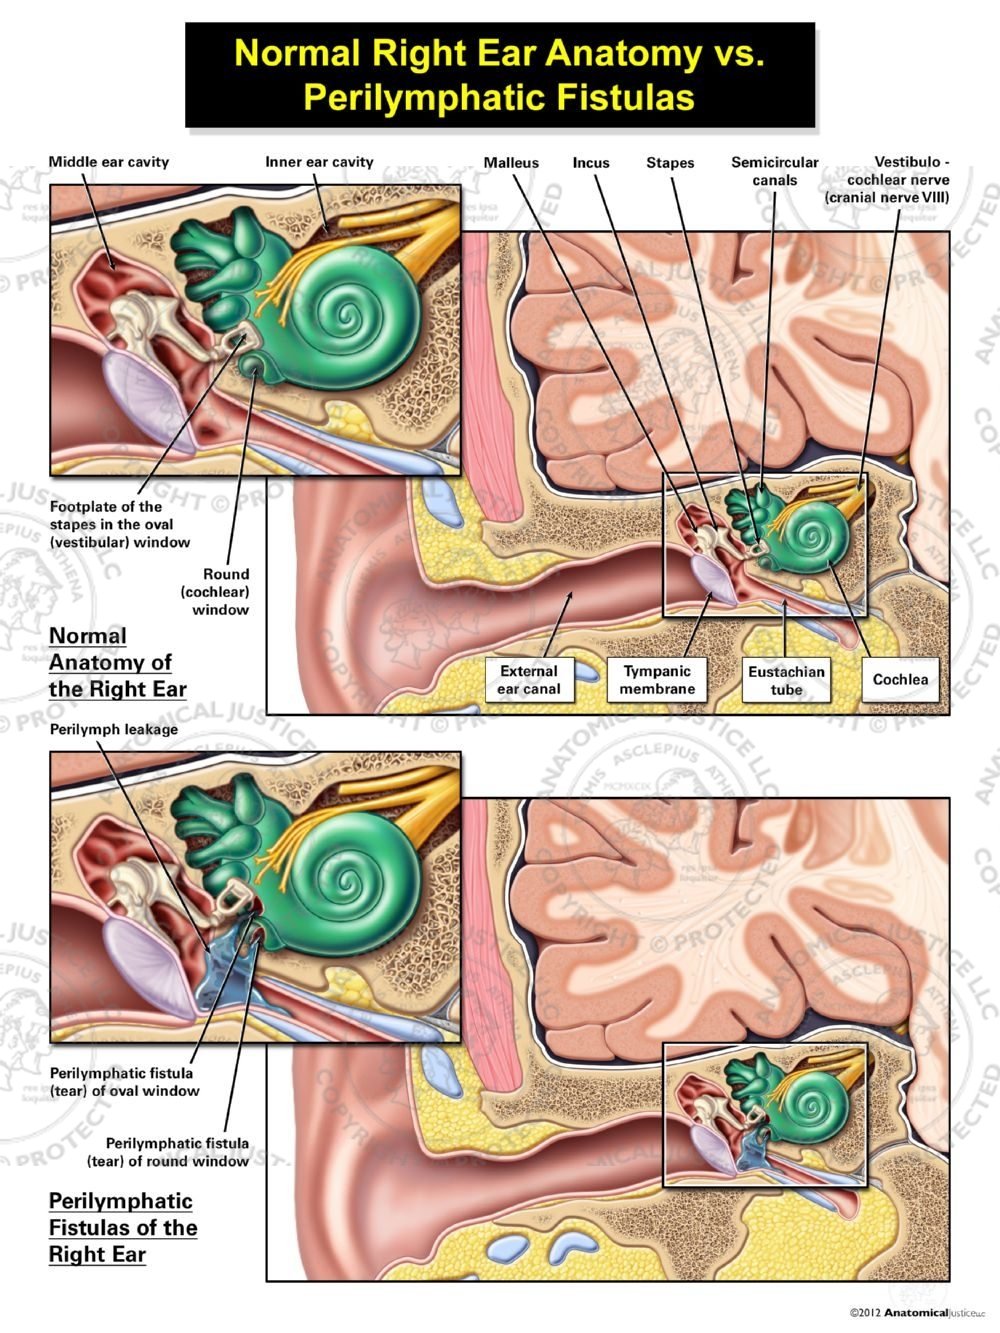 Normal Right Ear Anatomy vs. Perilymphatic Fistulas